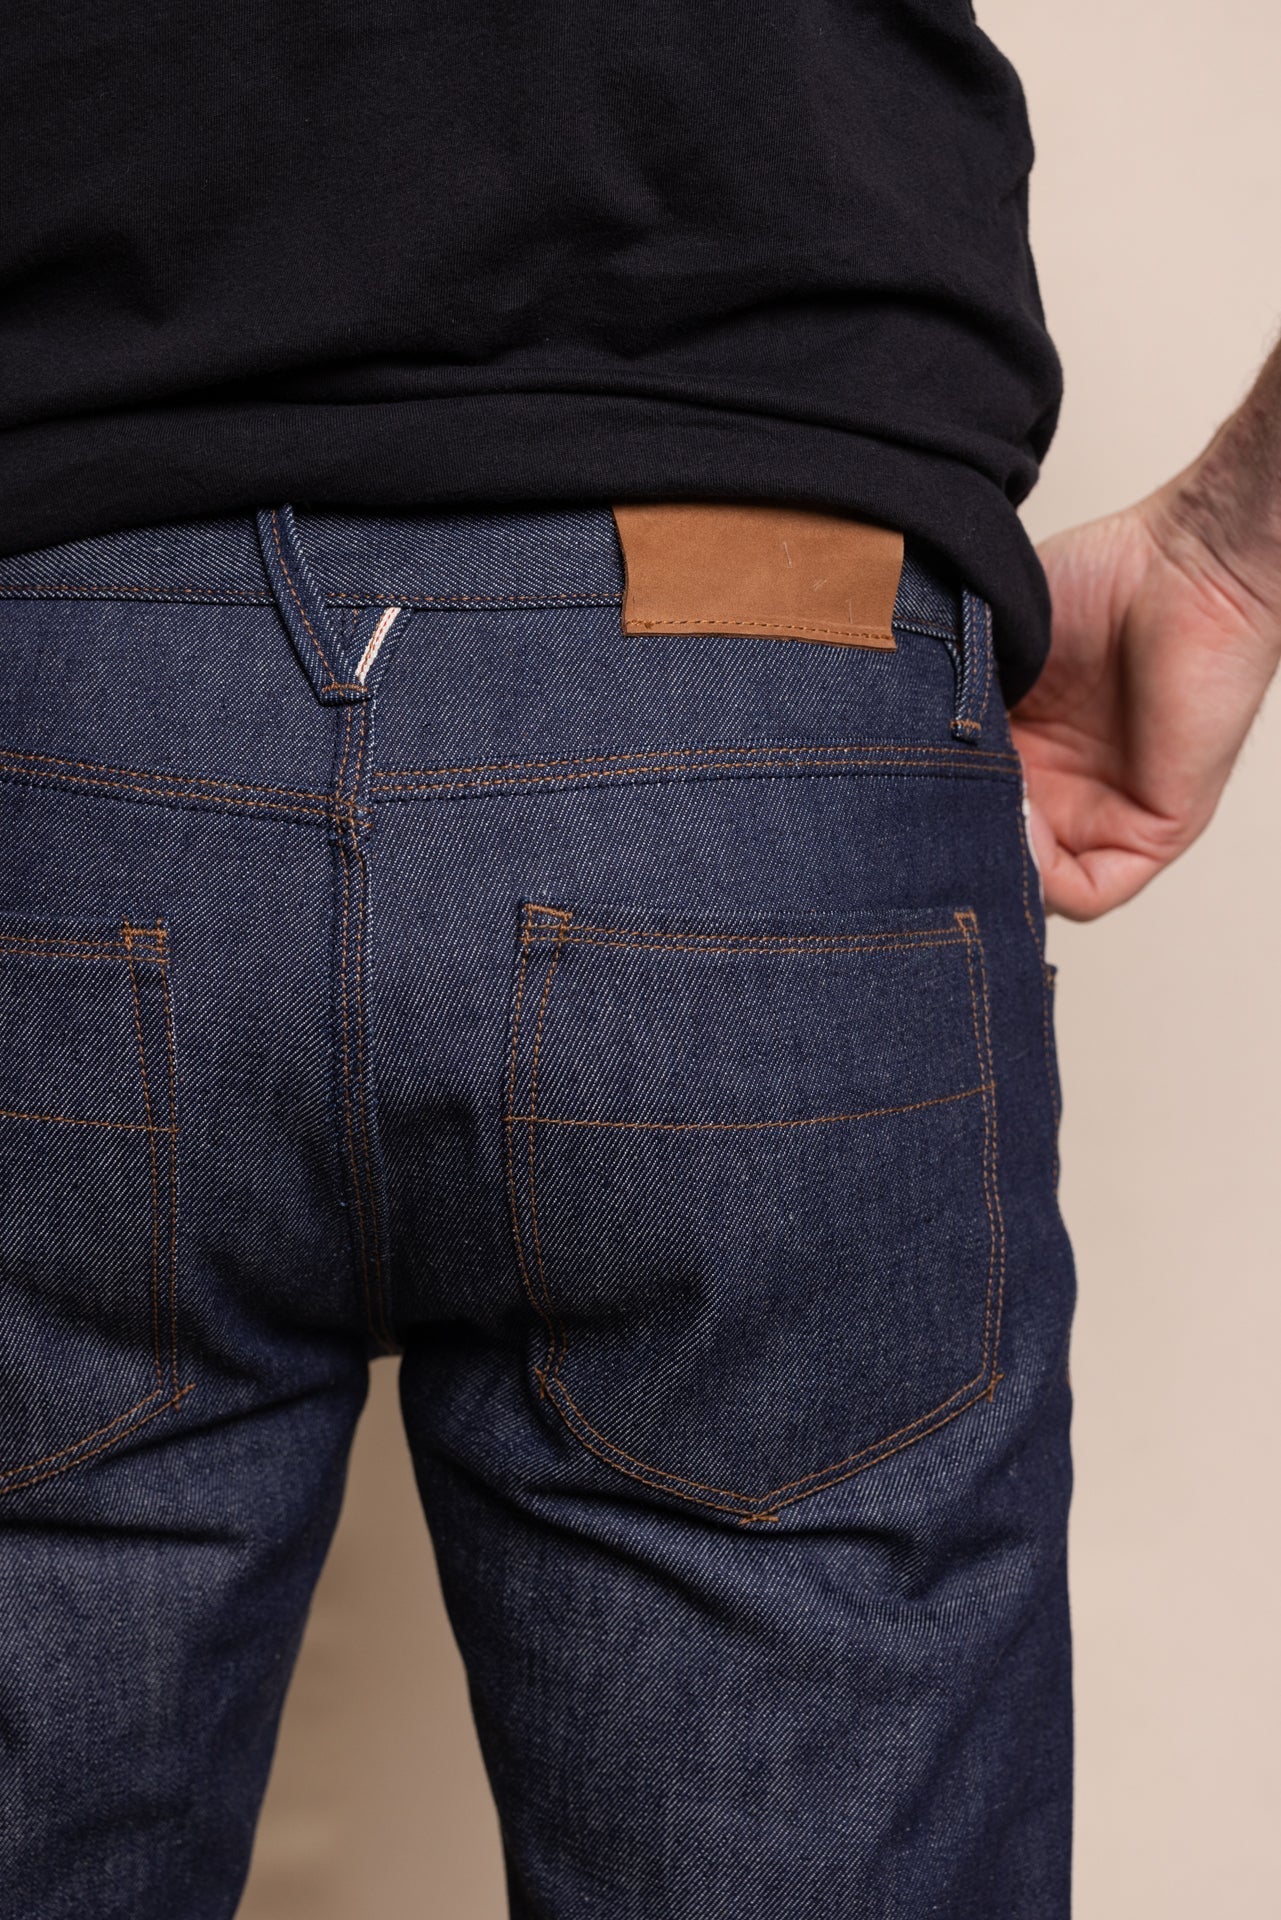 RRR Cone Denim Jeans in vintage wash - Western Cut